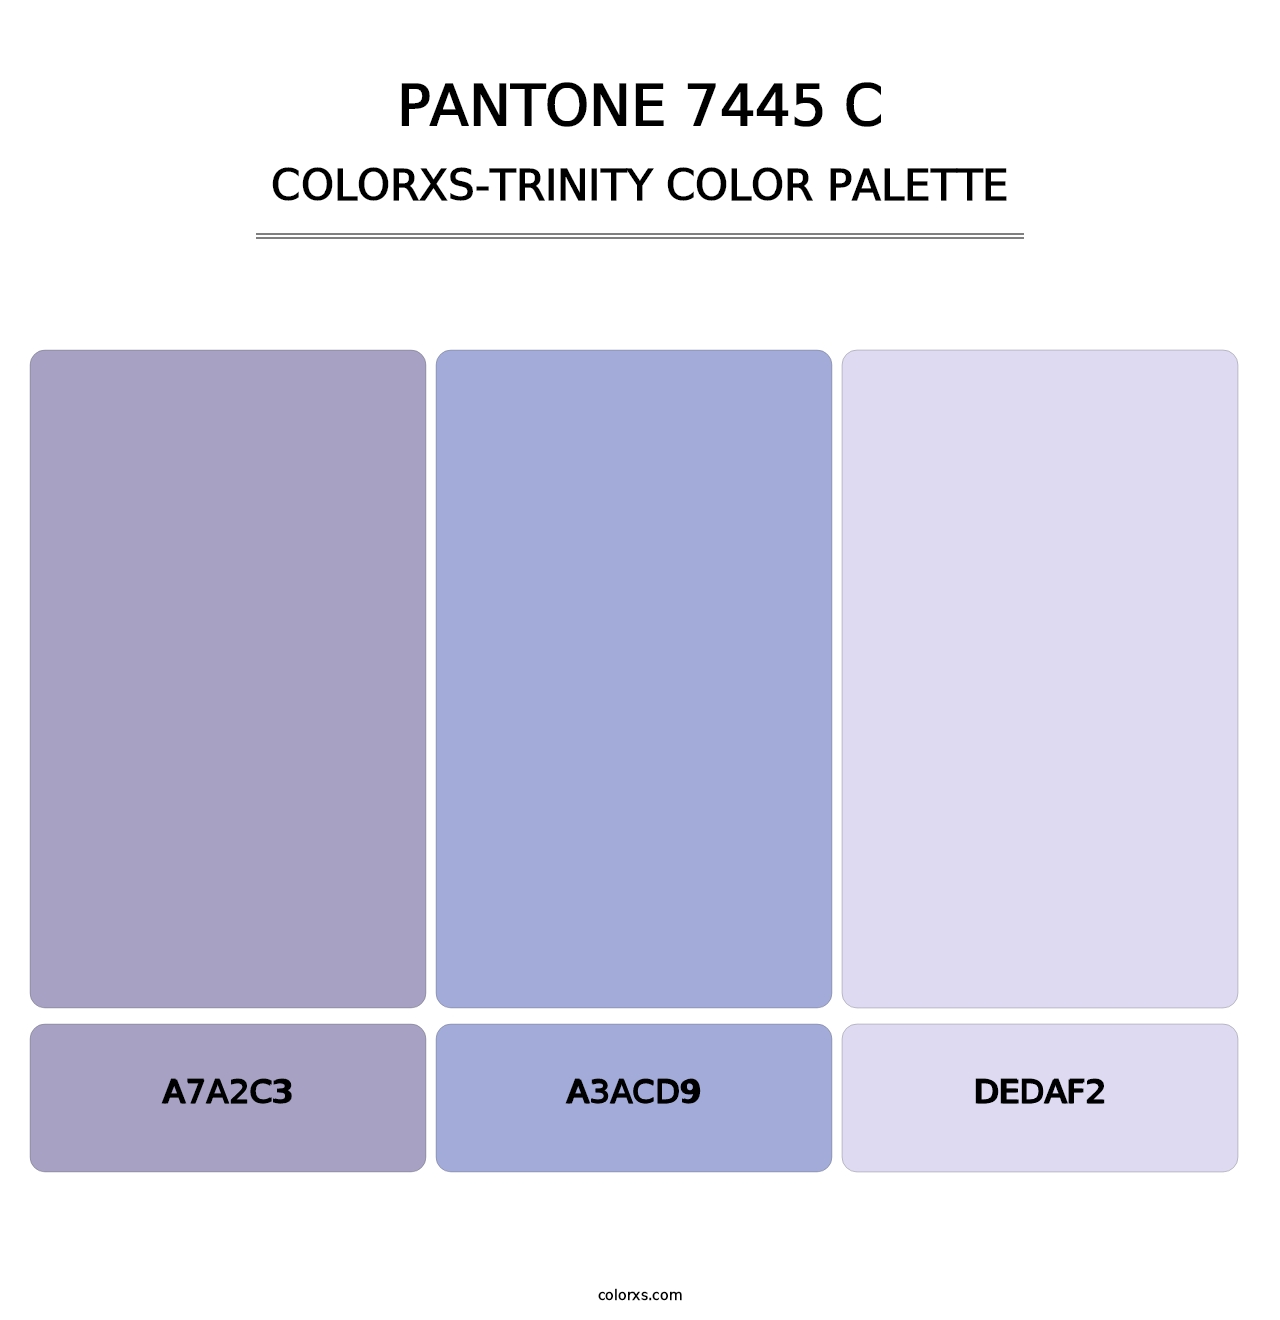 PANTONE 7445 C - Colorxs Trinity Palette